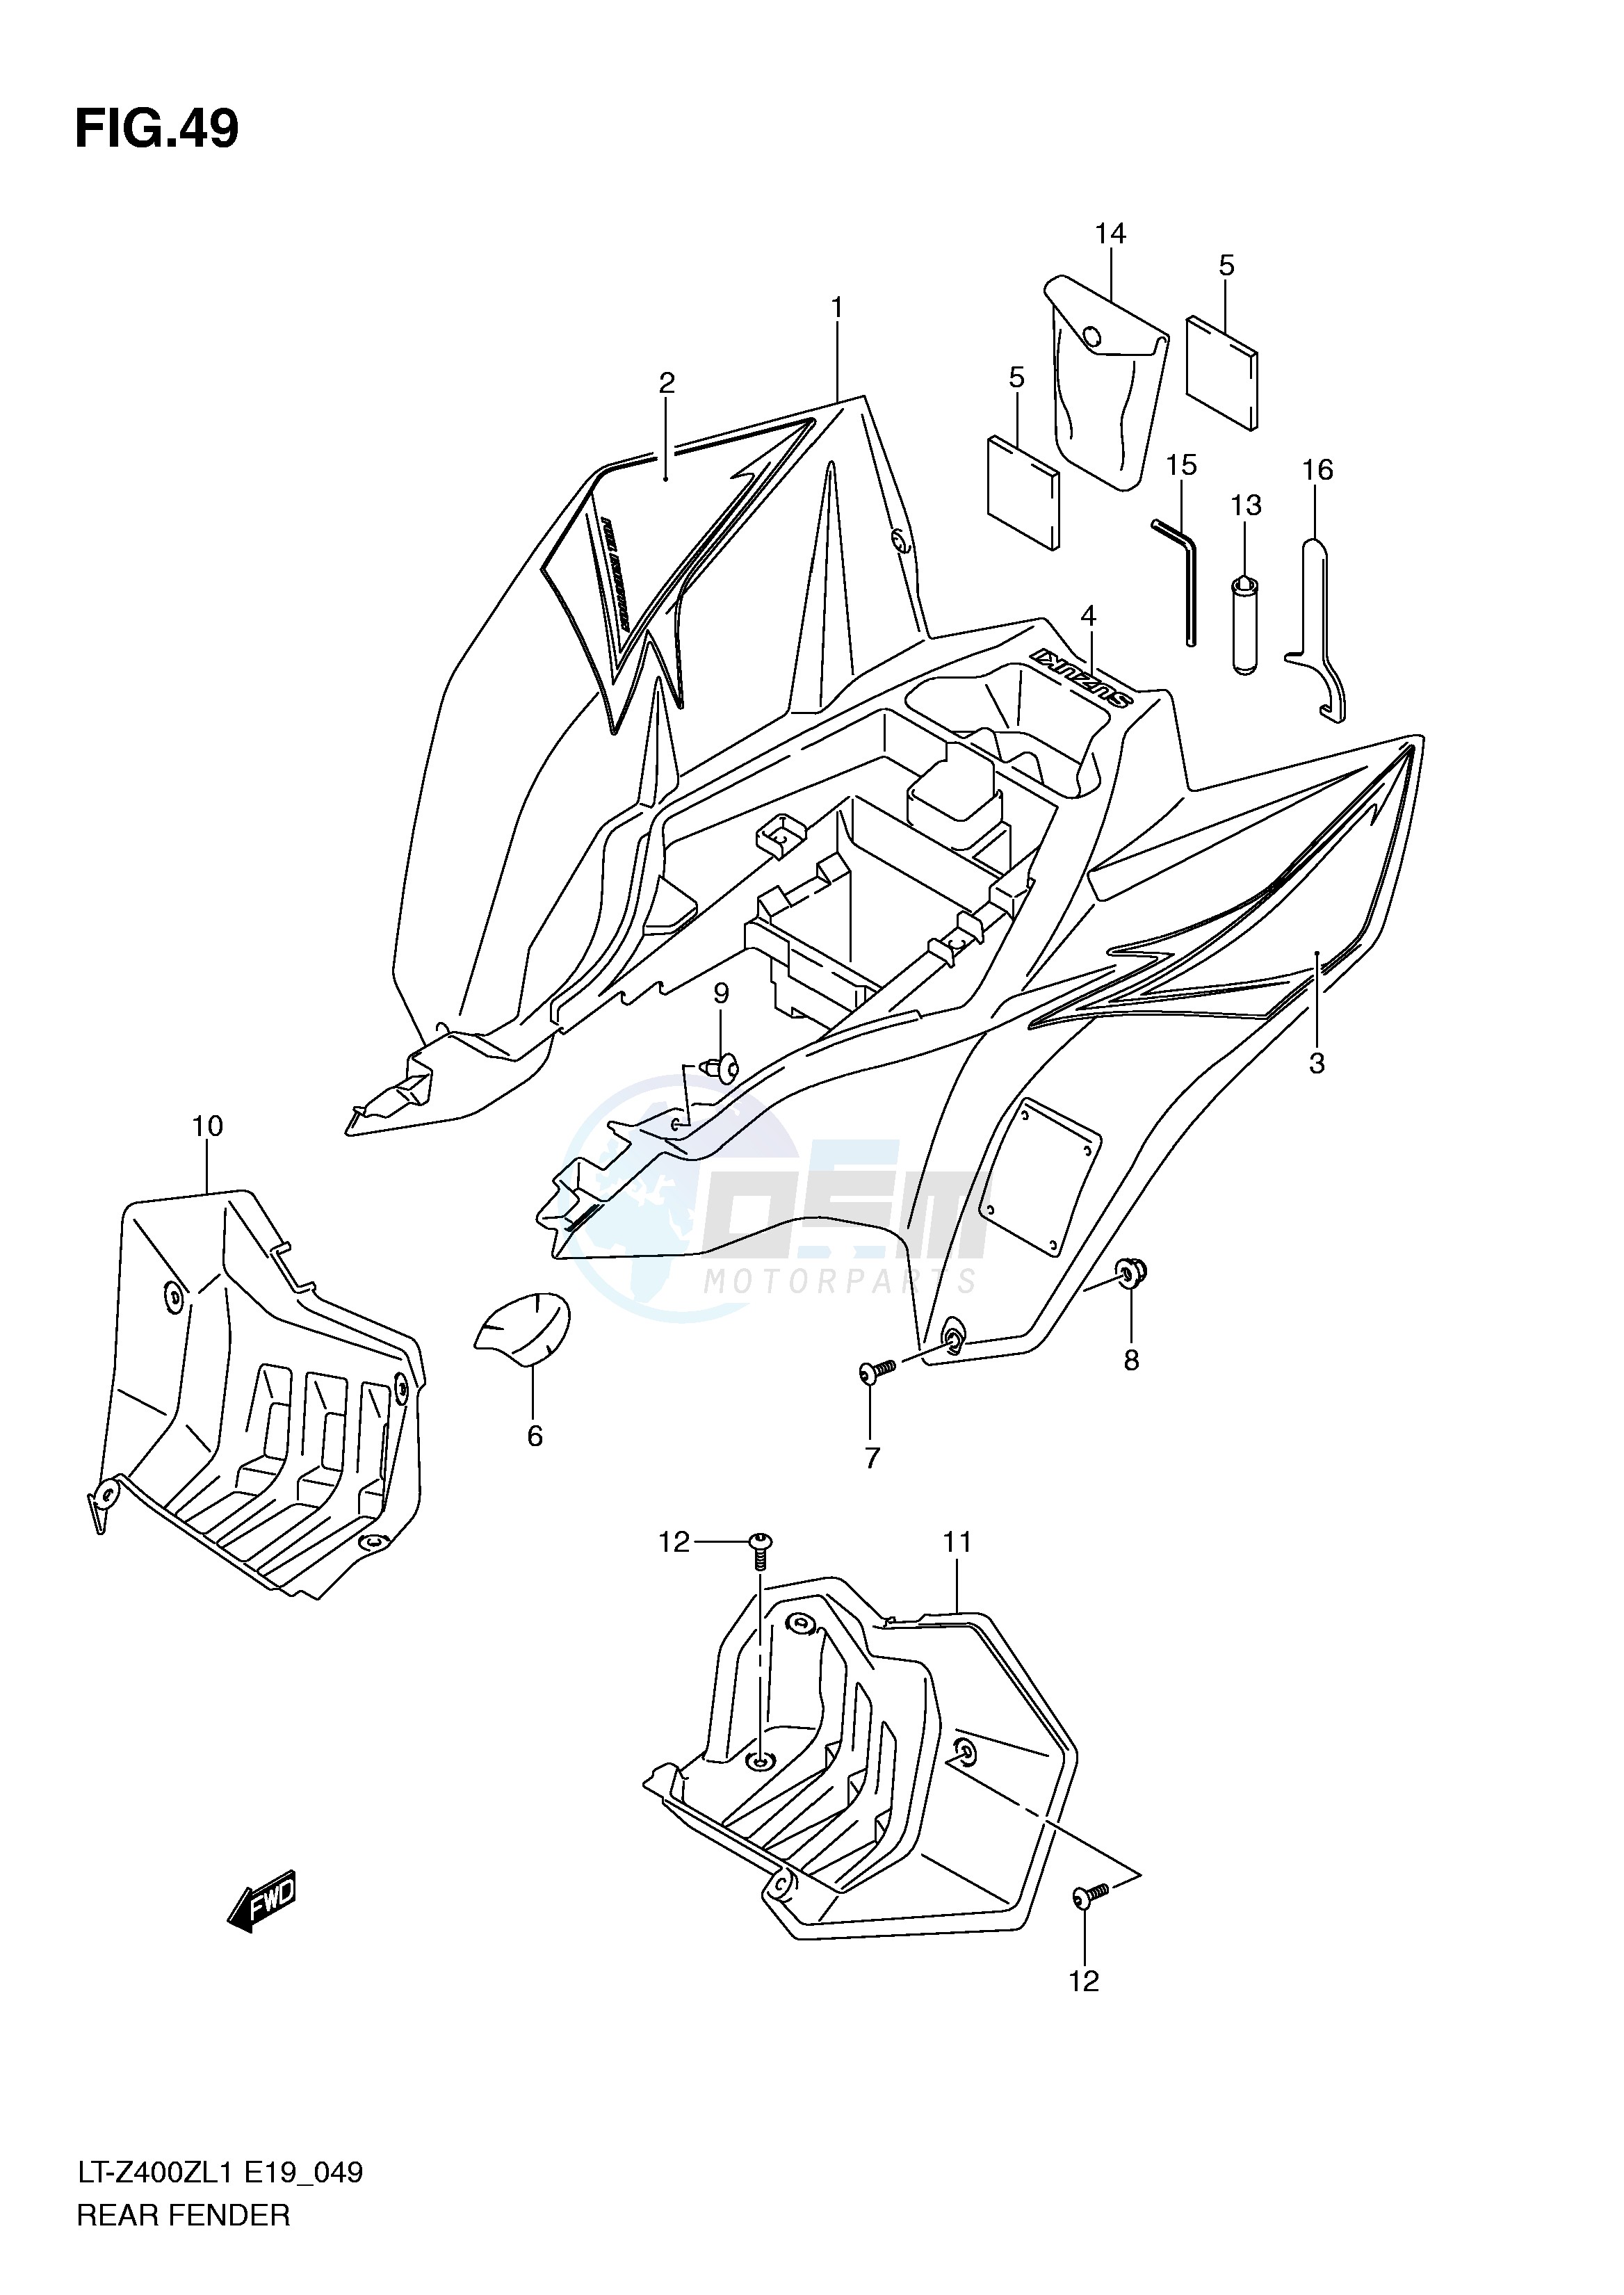 REAR FENDER (LT-Z400L1 E19) blueprint